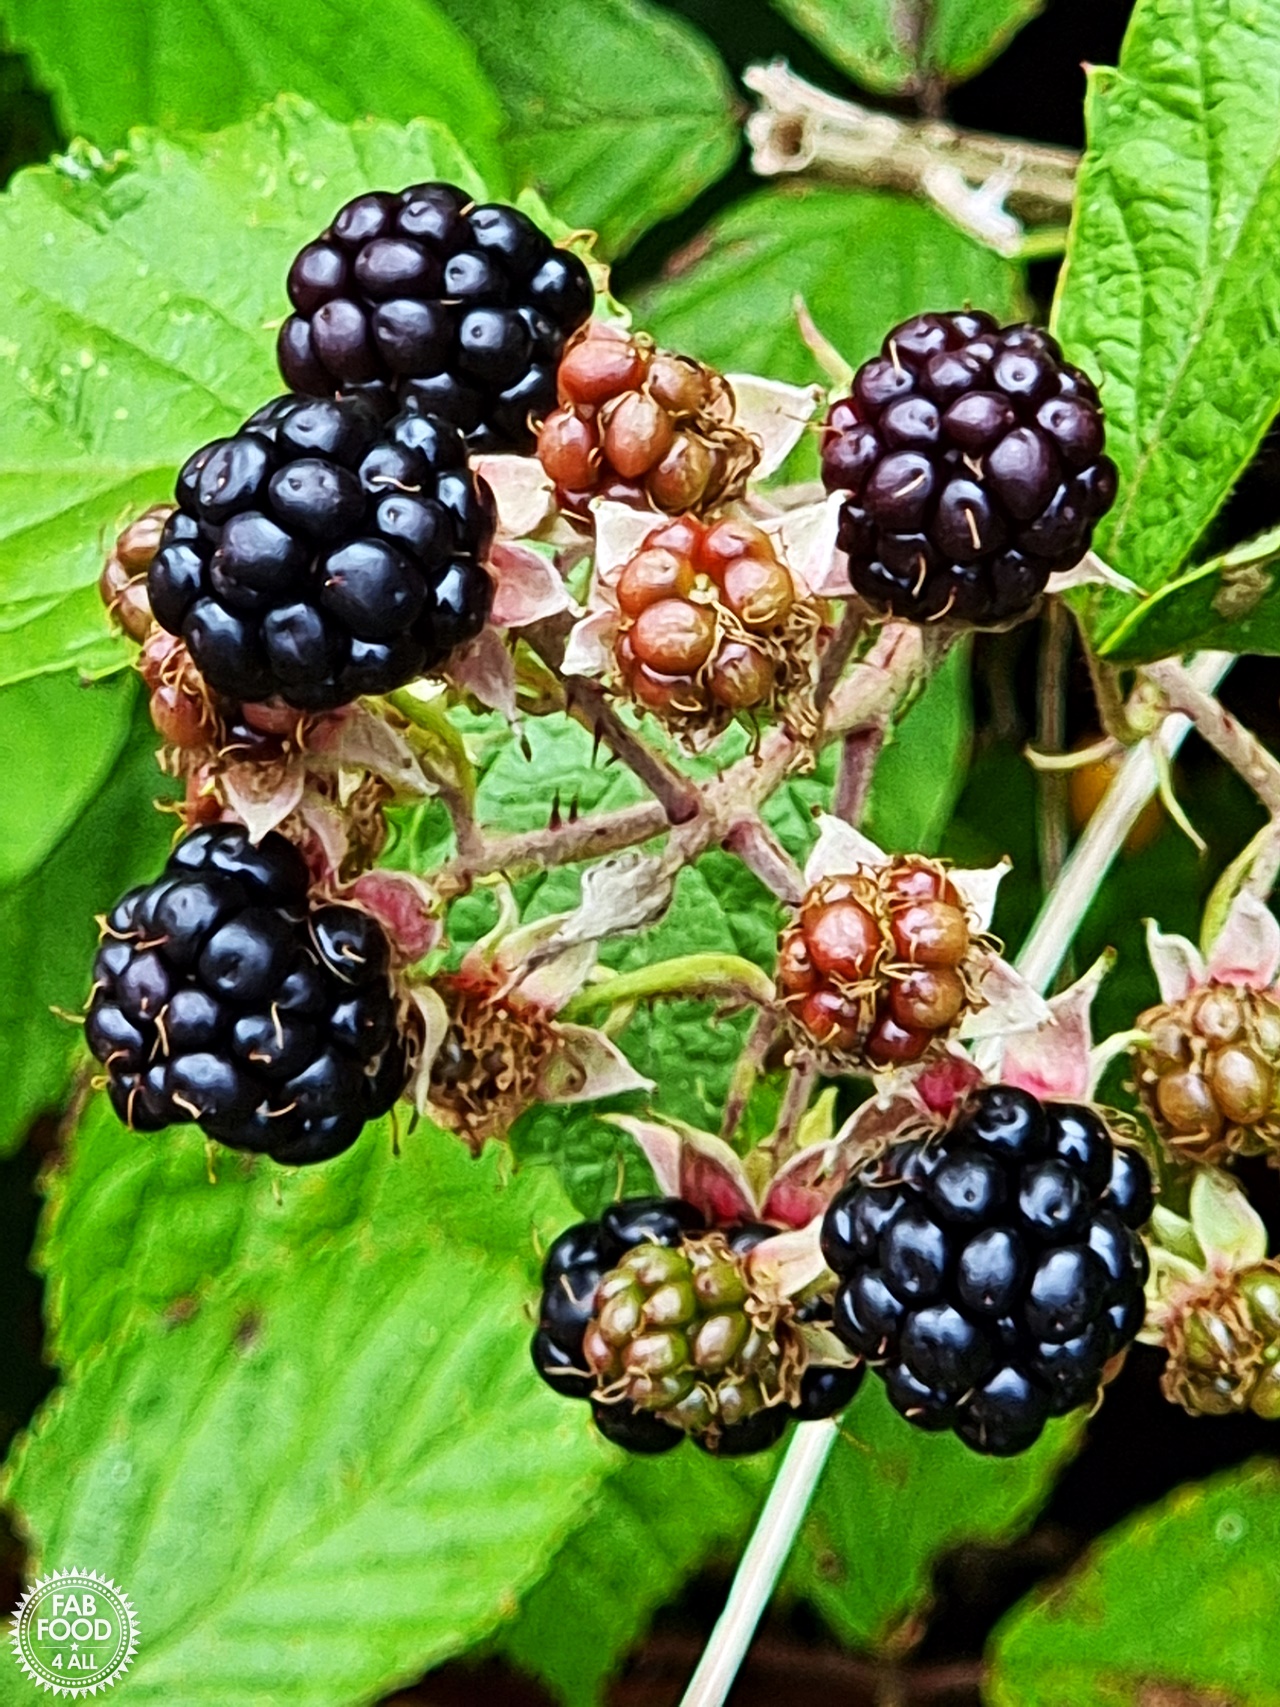 Blackberries growing on a bramble bush.